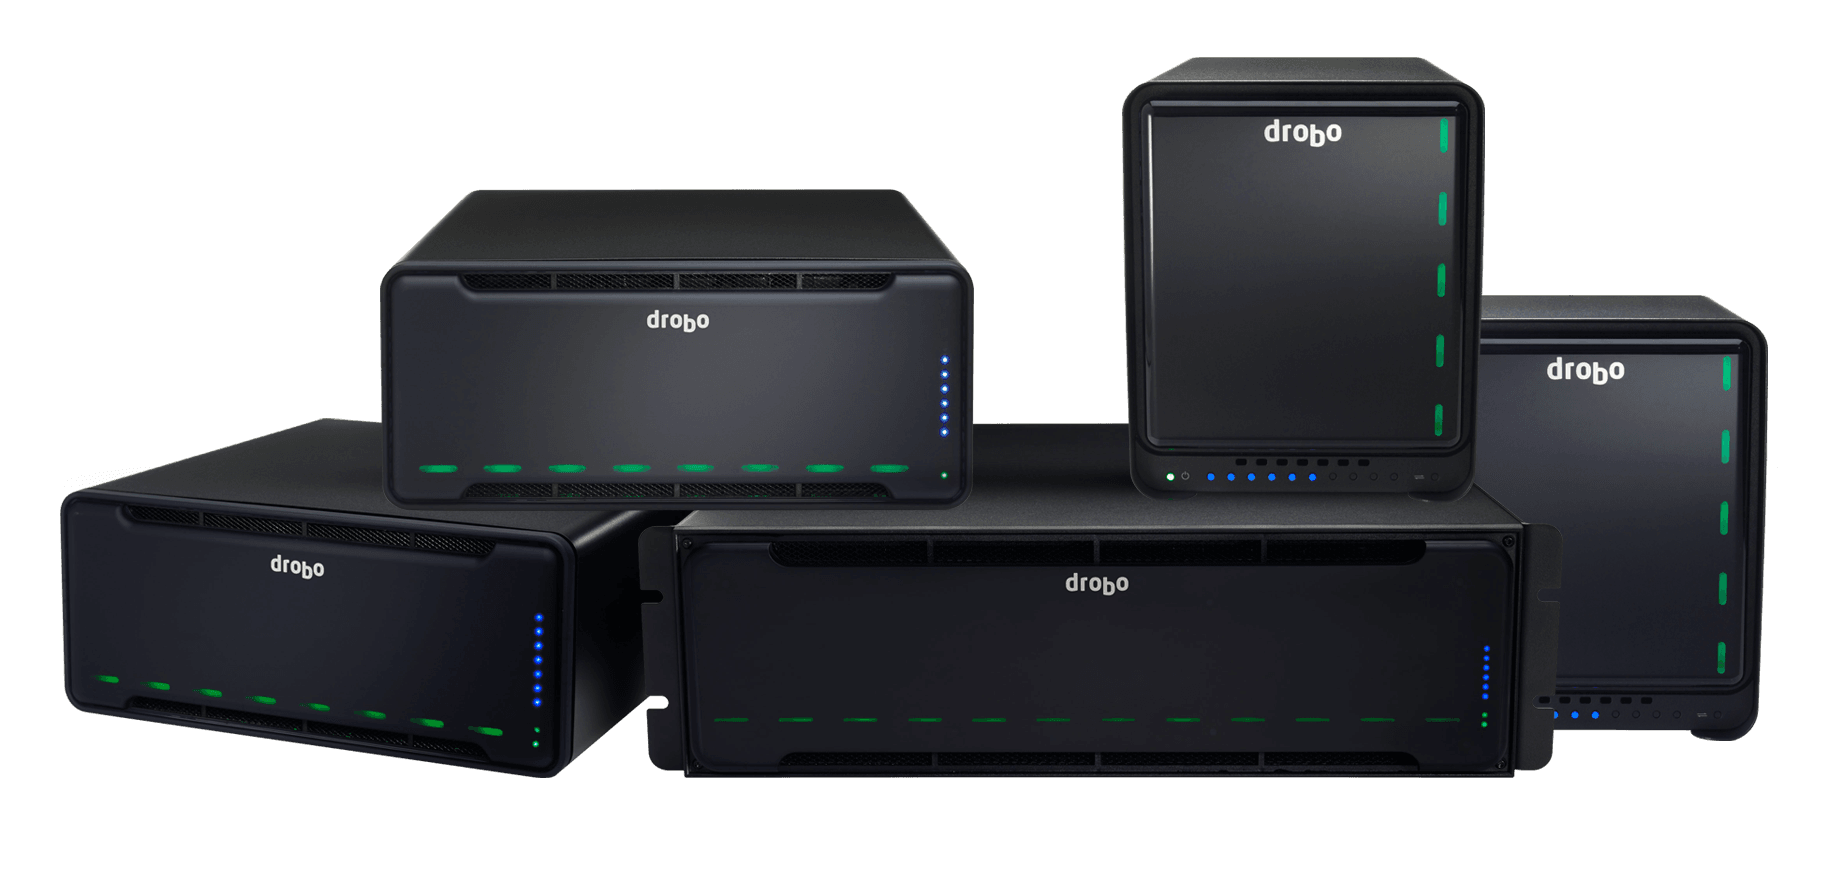 Drobo Storage Solutions Mac Support